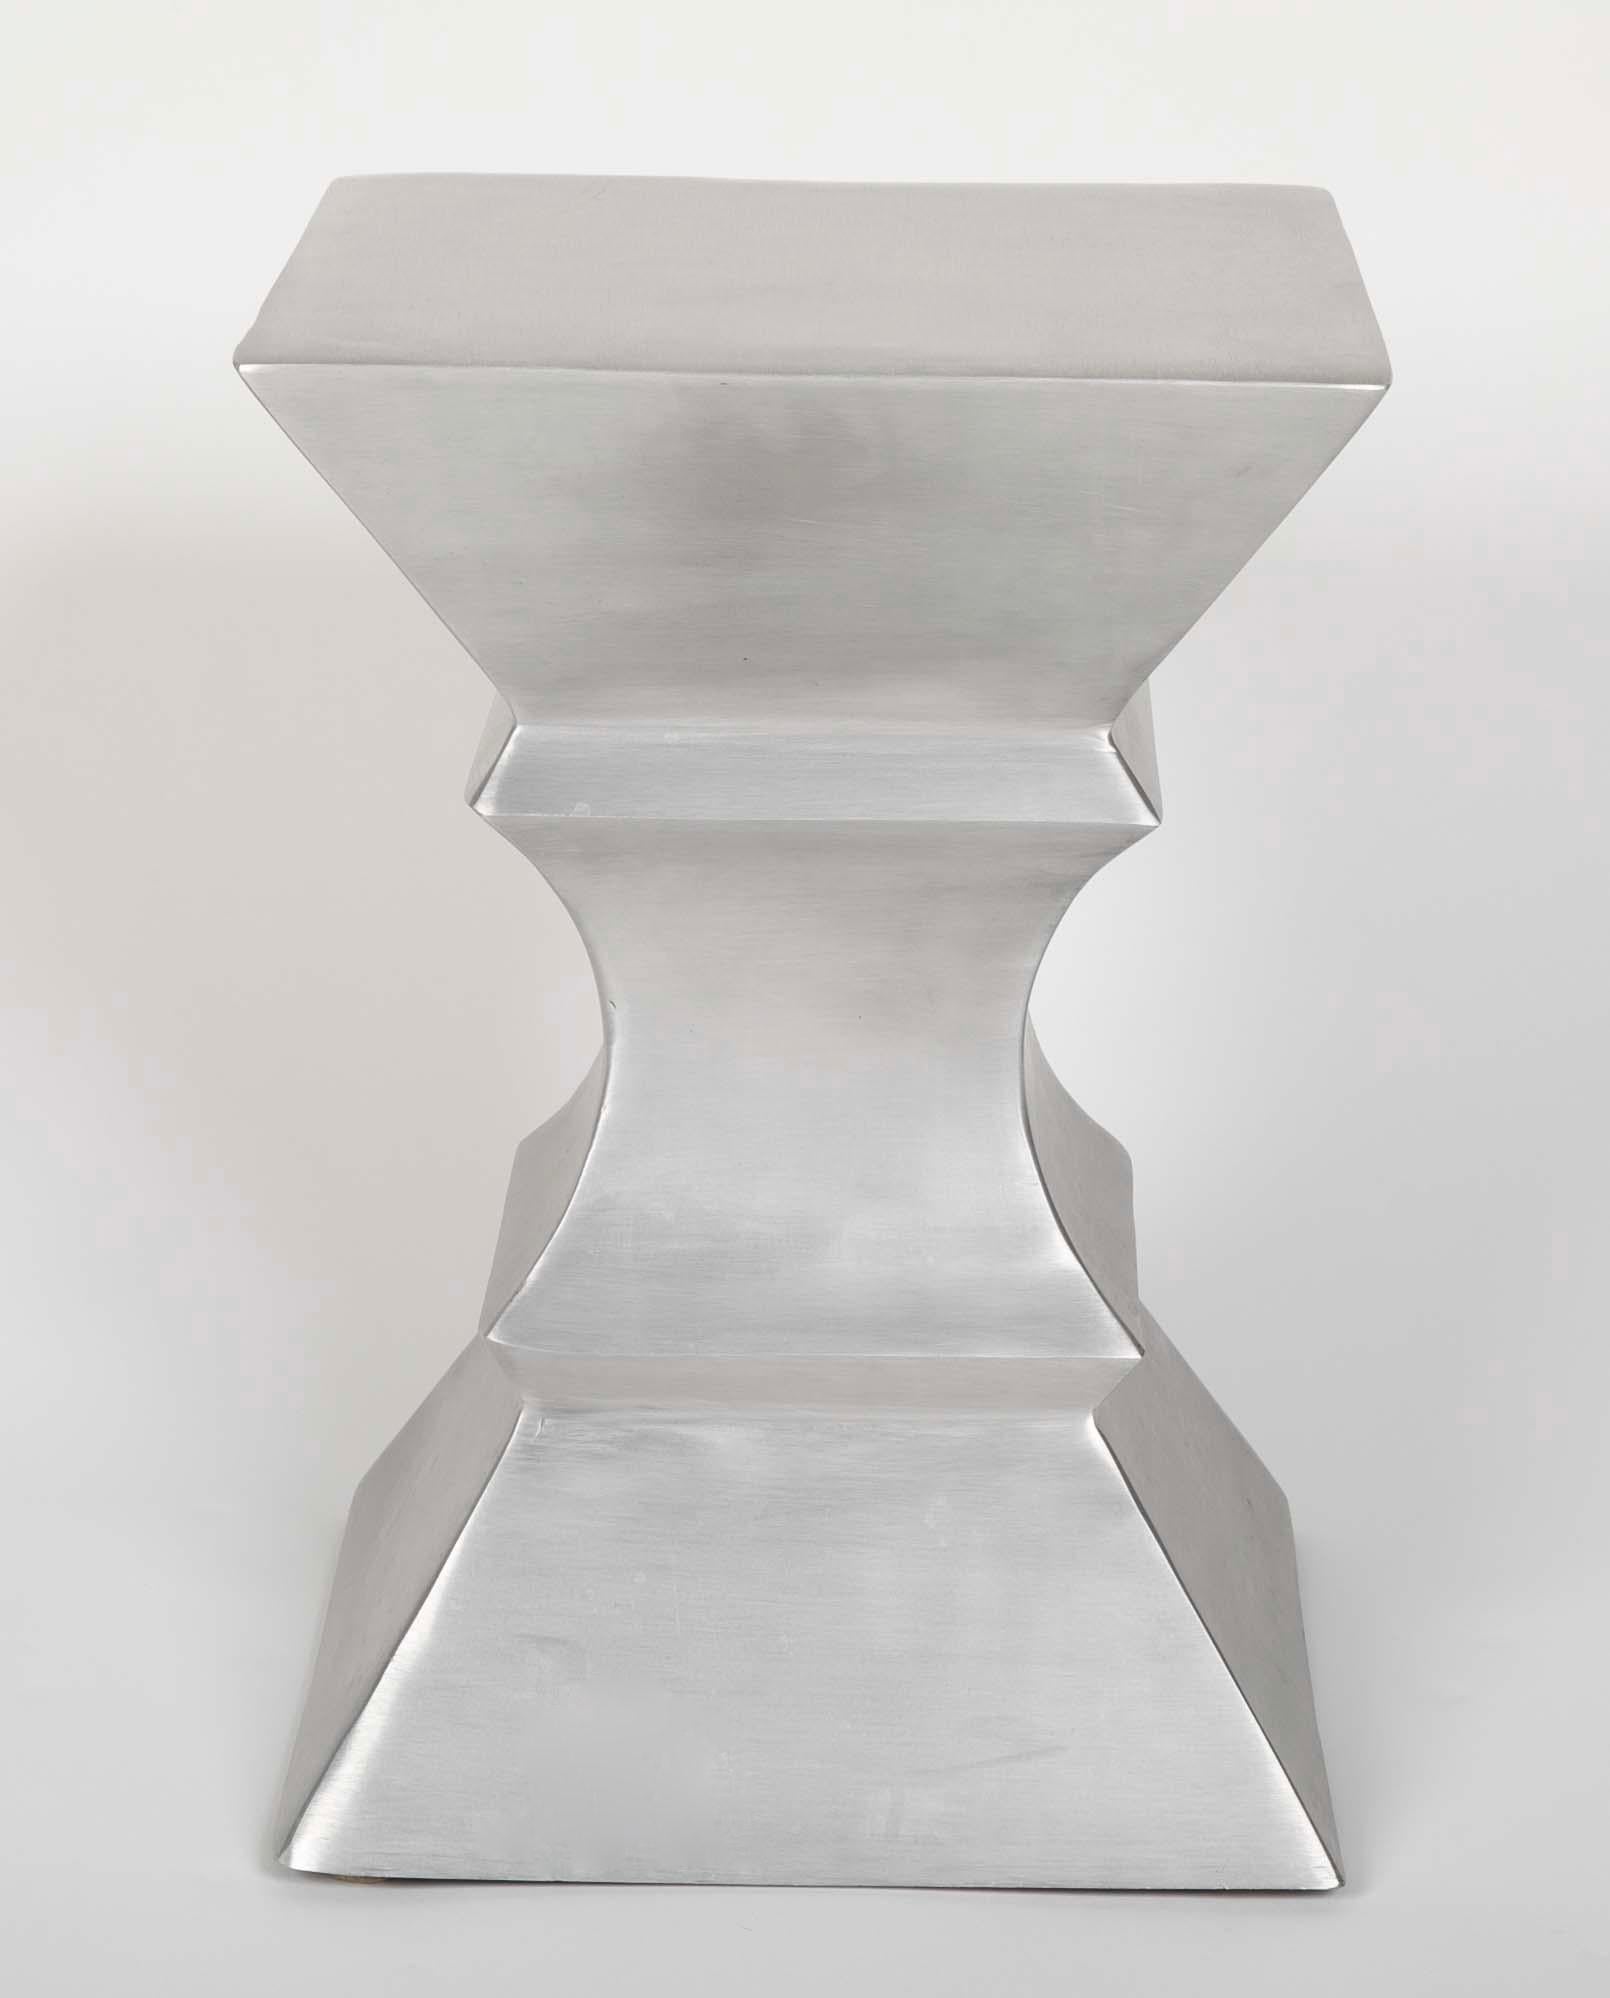 Brancusi Style Aluminum Side Tables, a Set of Three 1